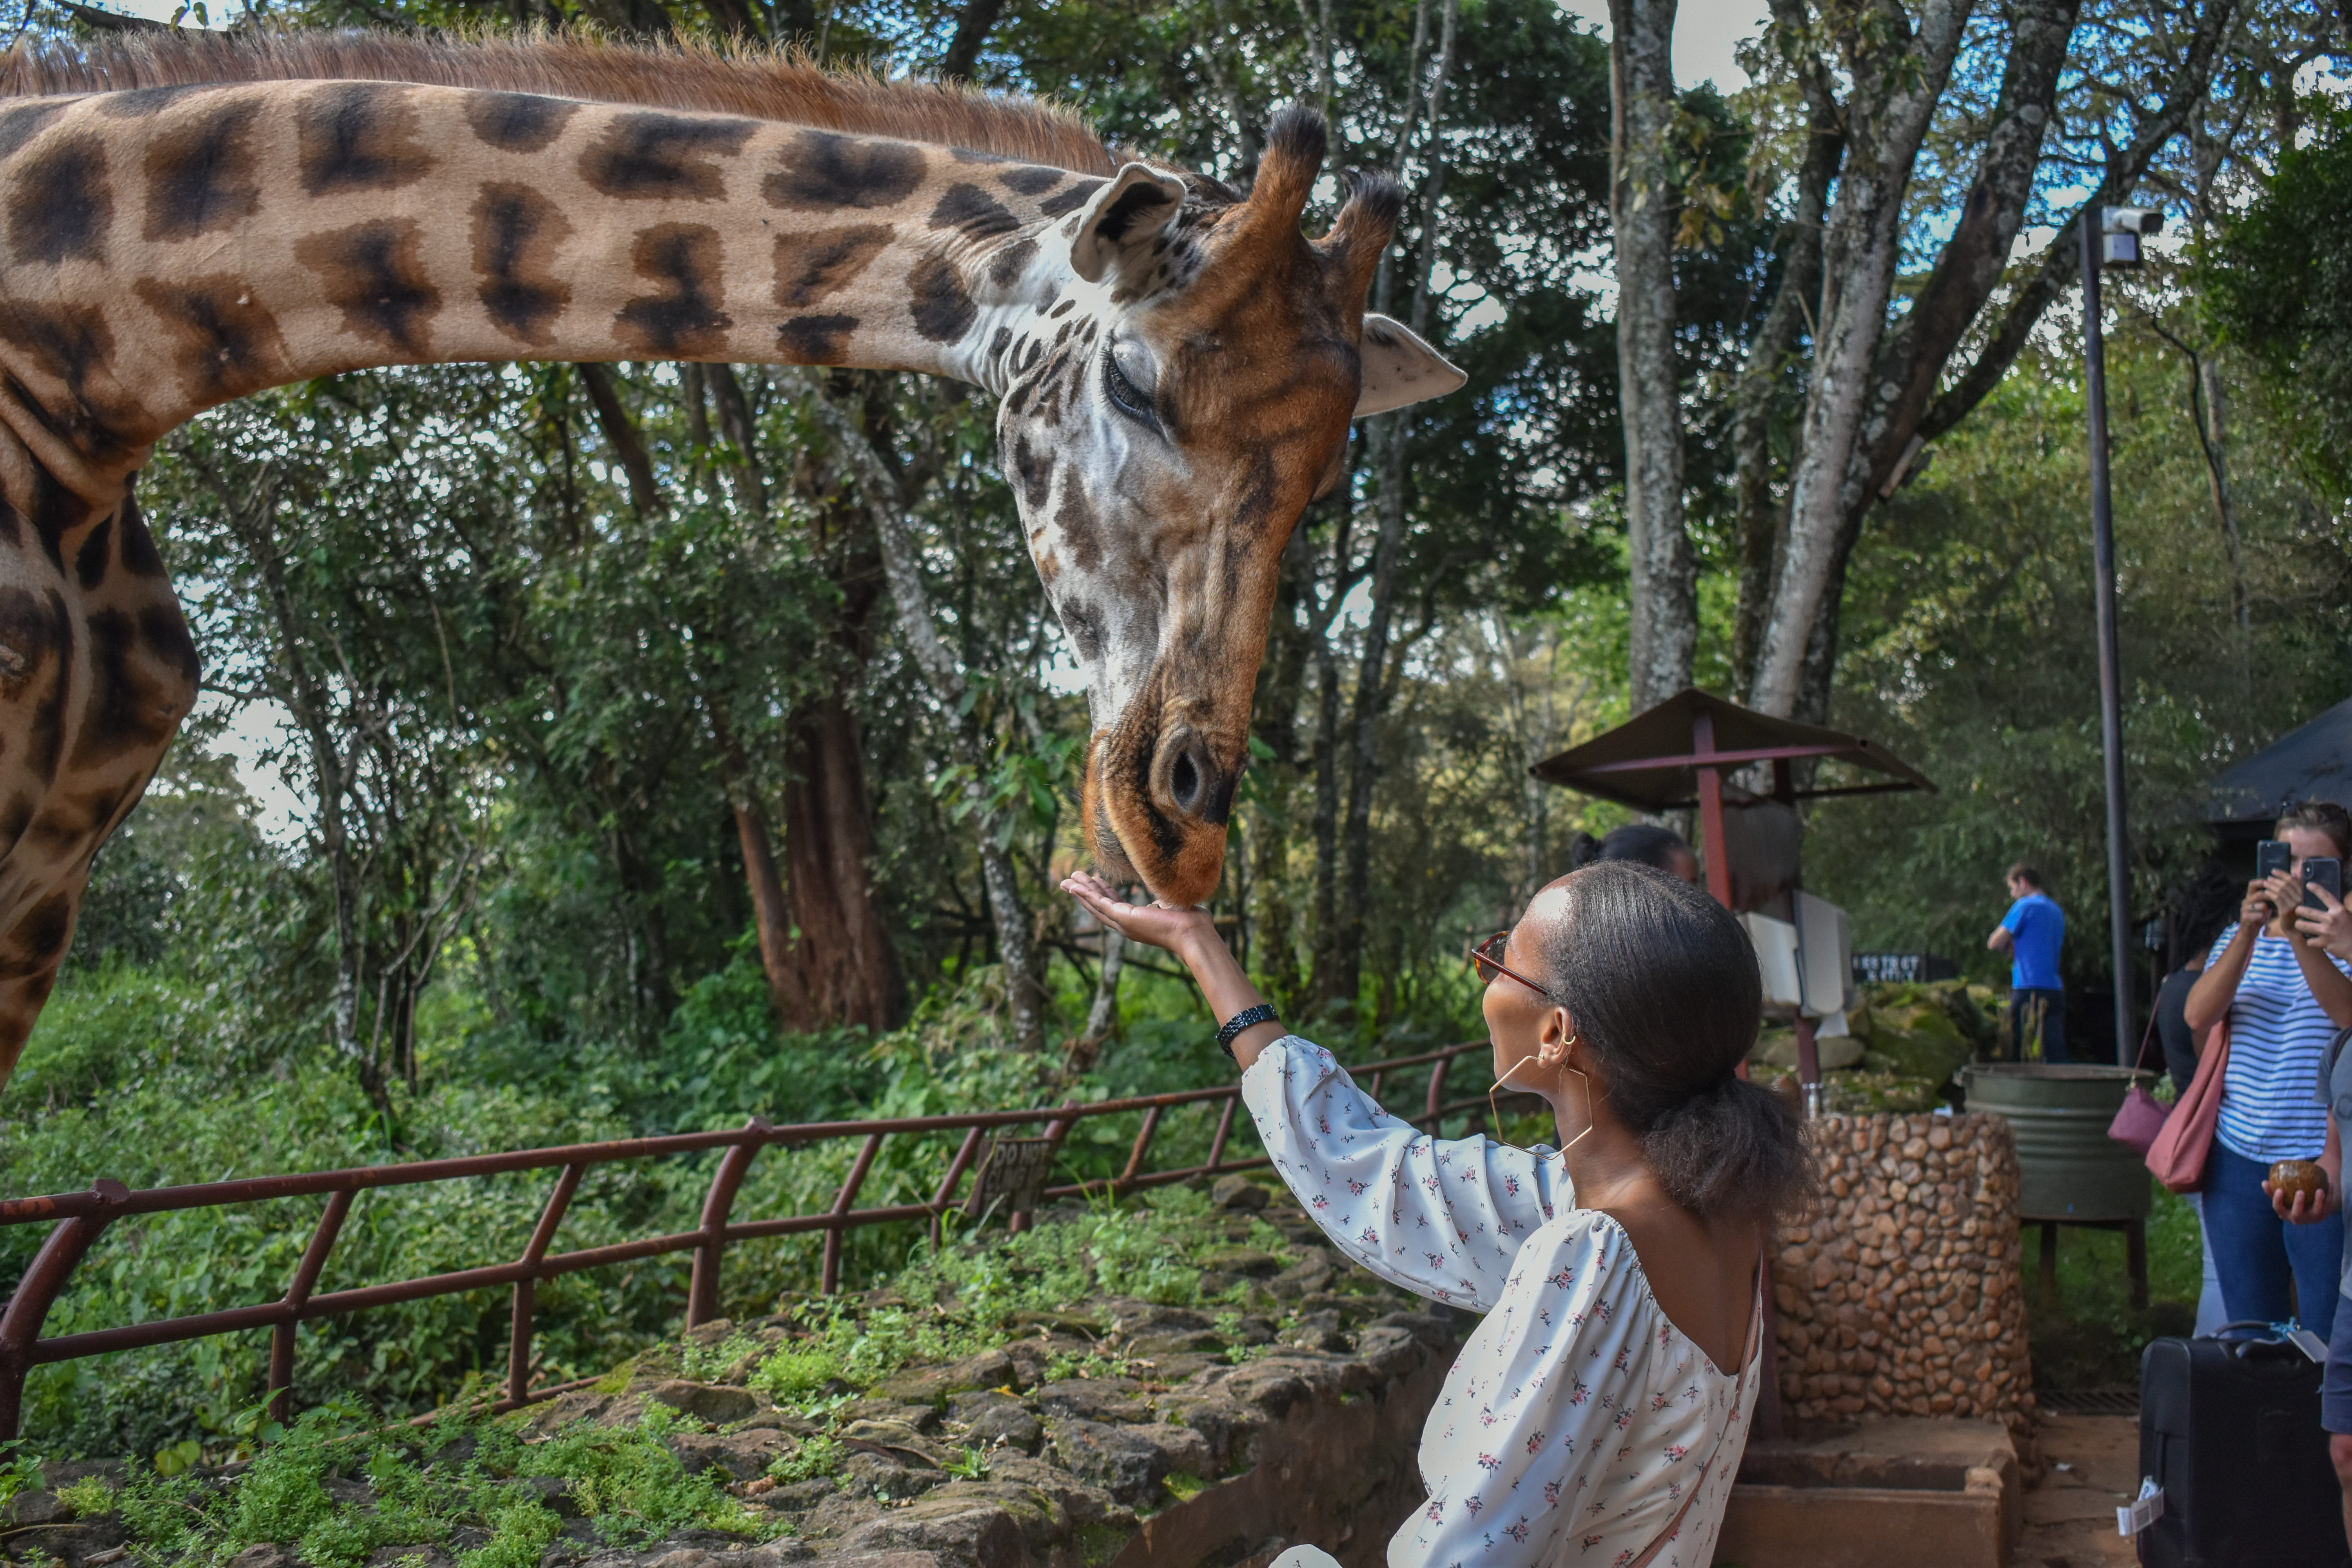 A woman feeds the giraffe at the Giraffe Center in Nairobi, Kenya. | Source: Shutterstock